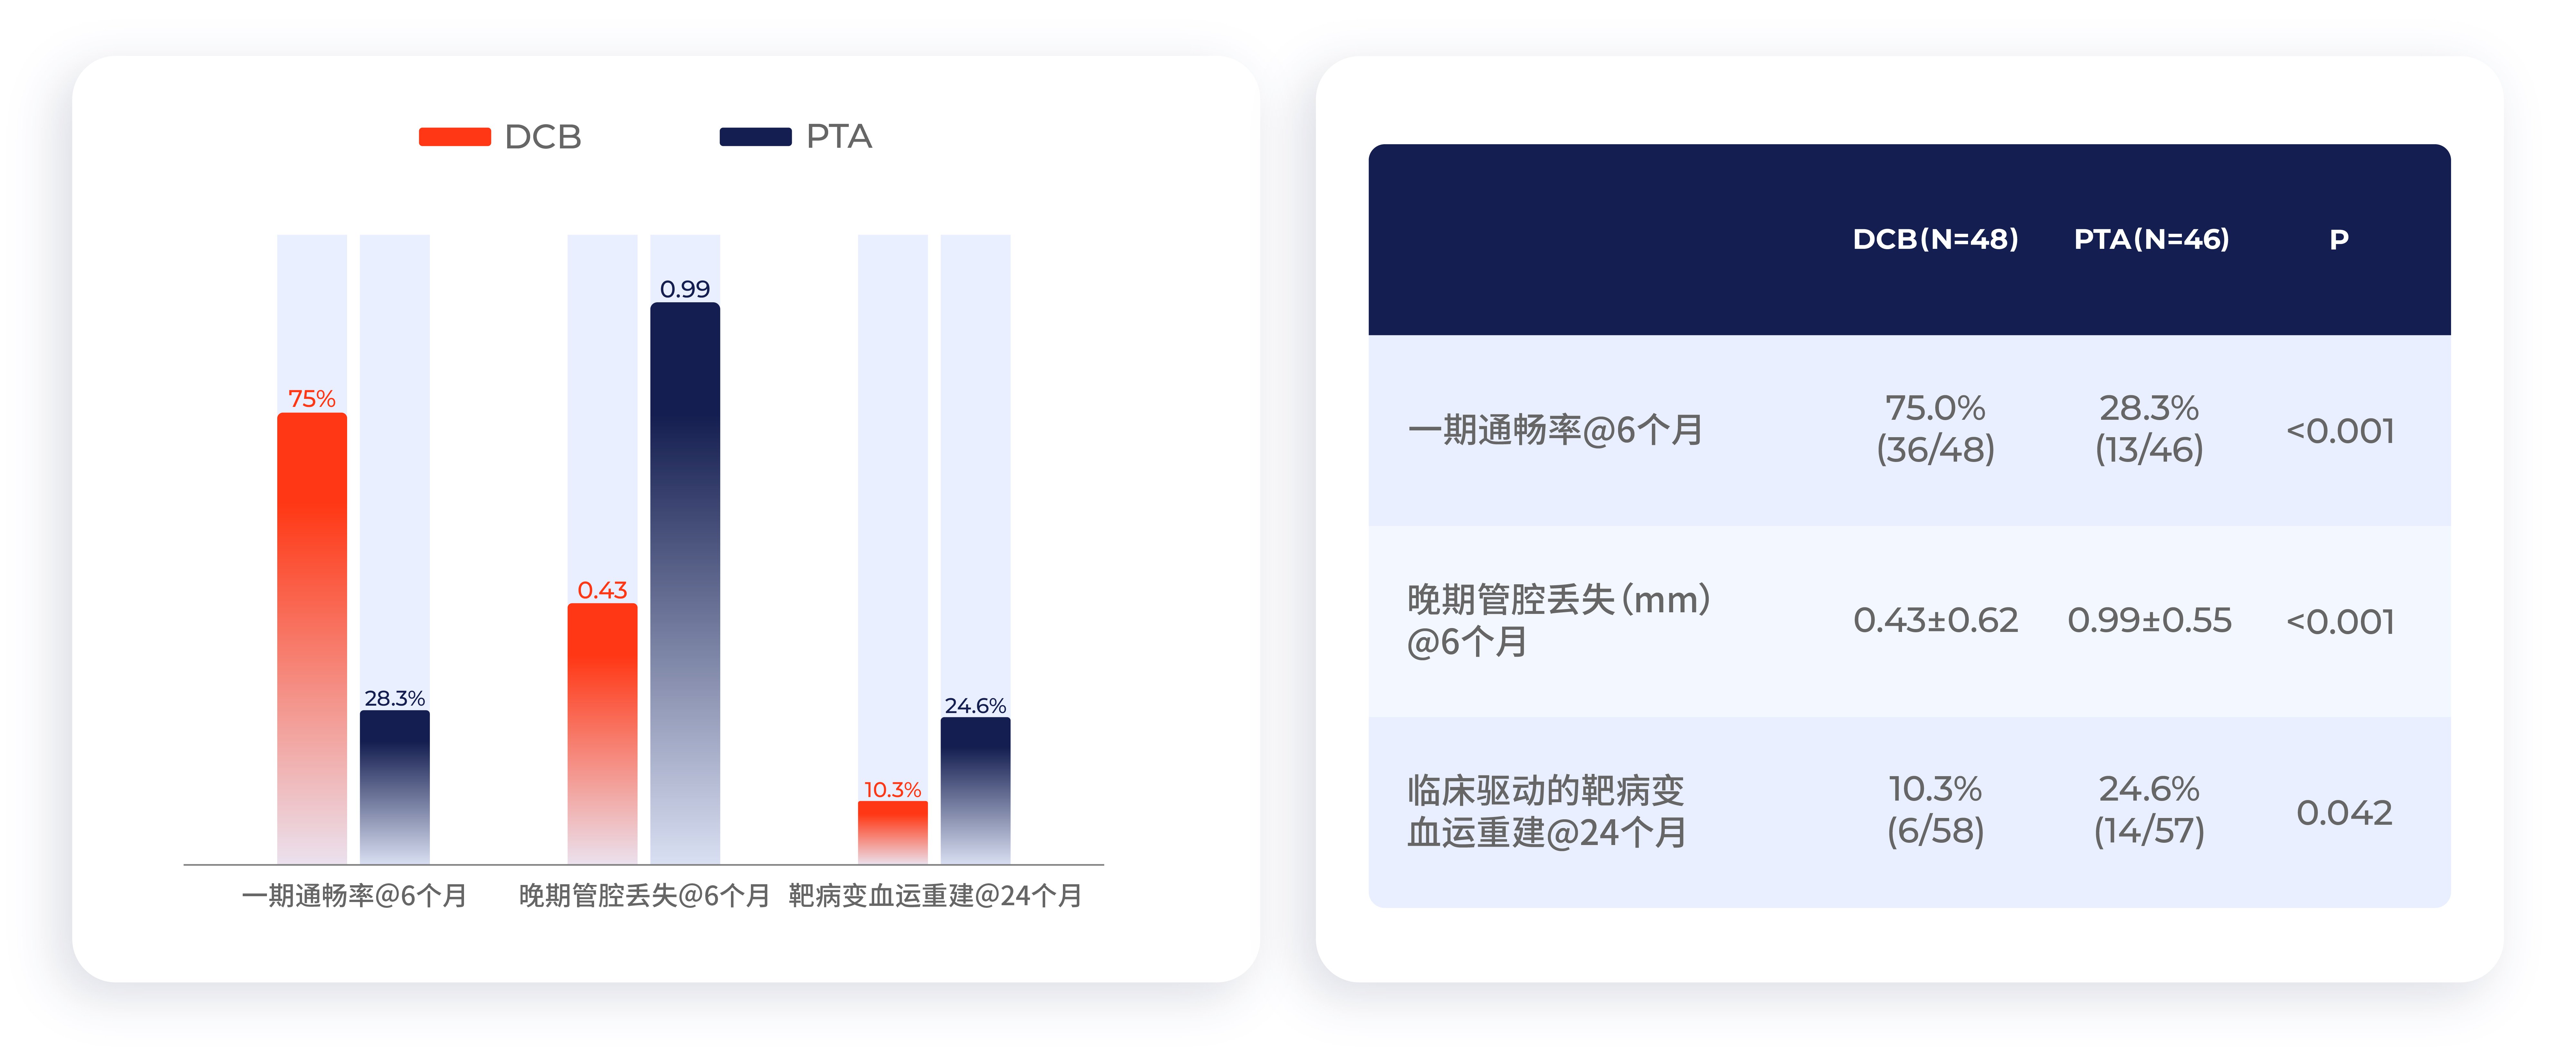 BTK中国数据- DCB疗效高于PTA.jpg